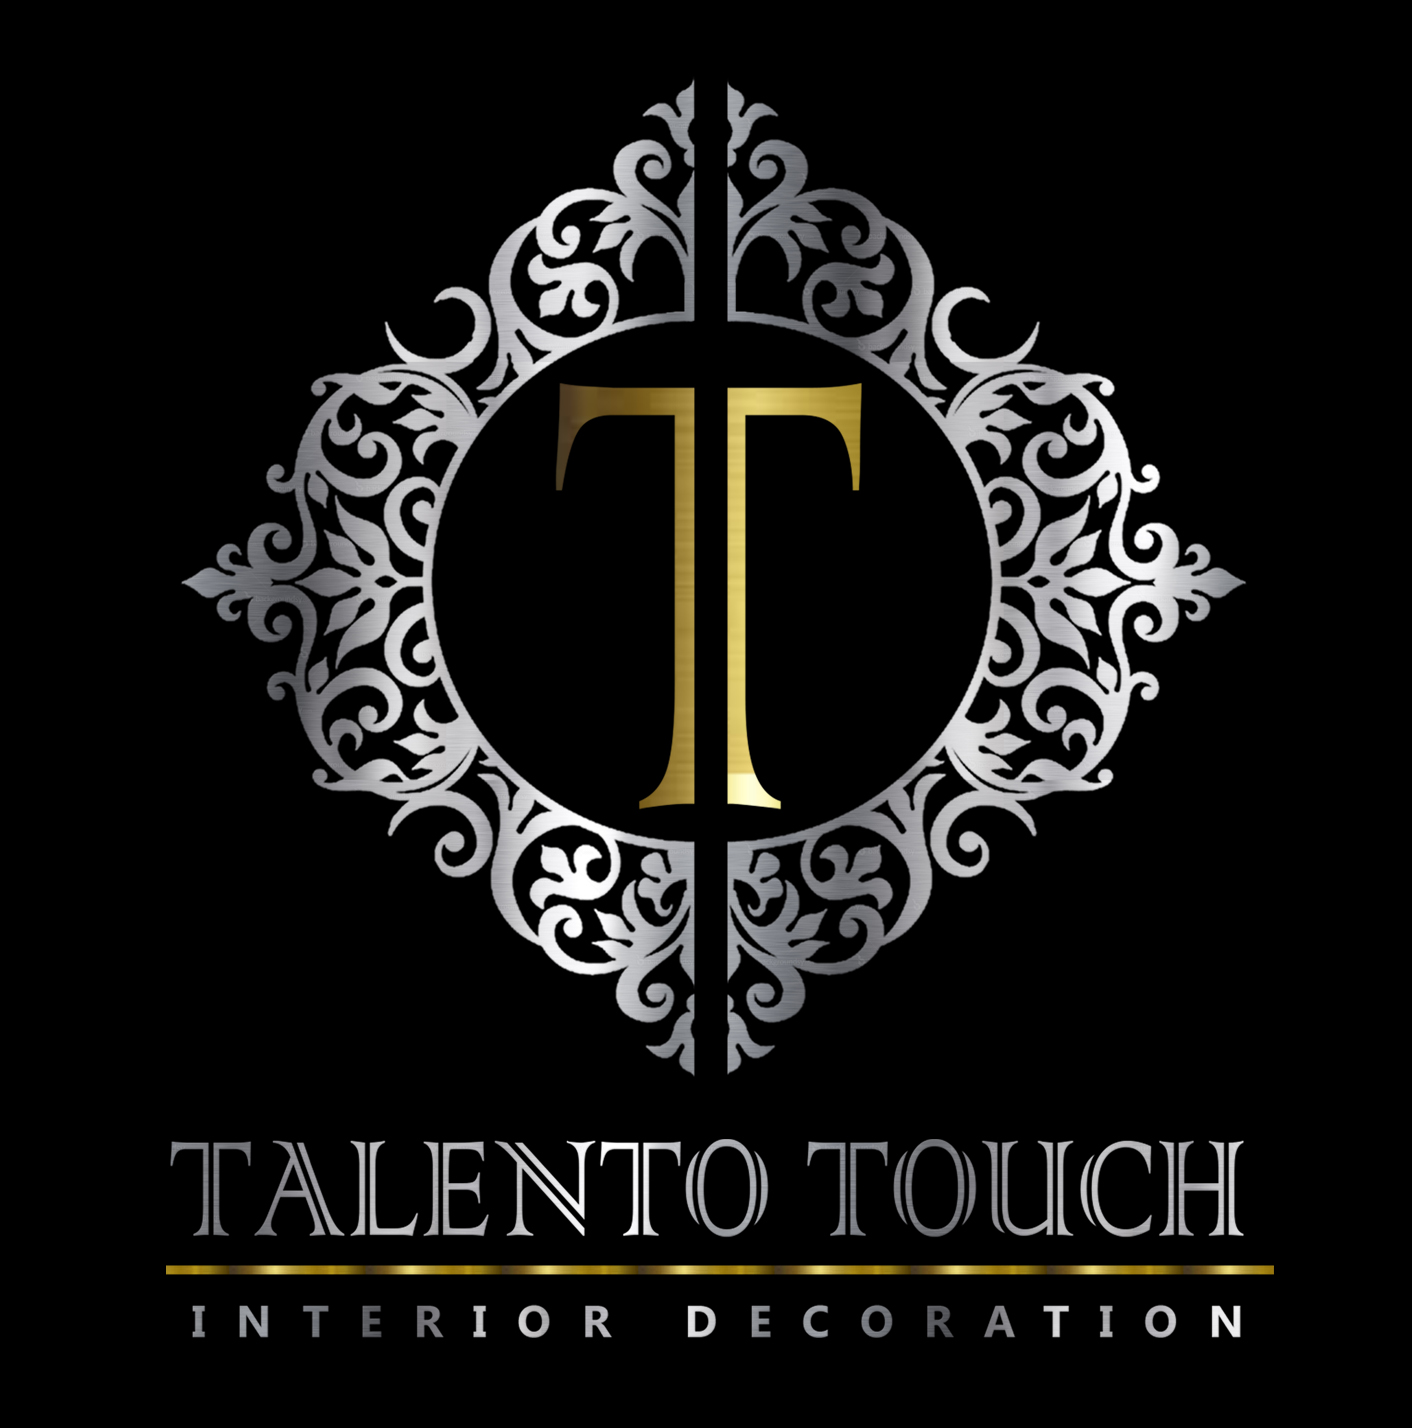 TALENTO TOUCH INTERIOR DECORATION